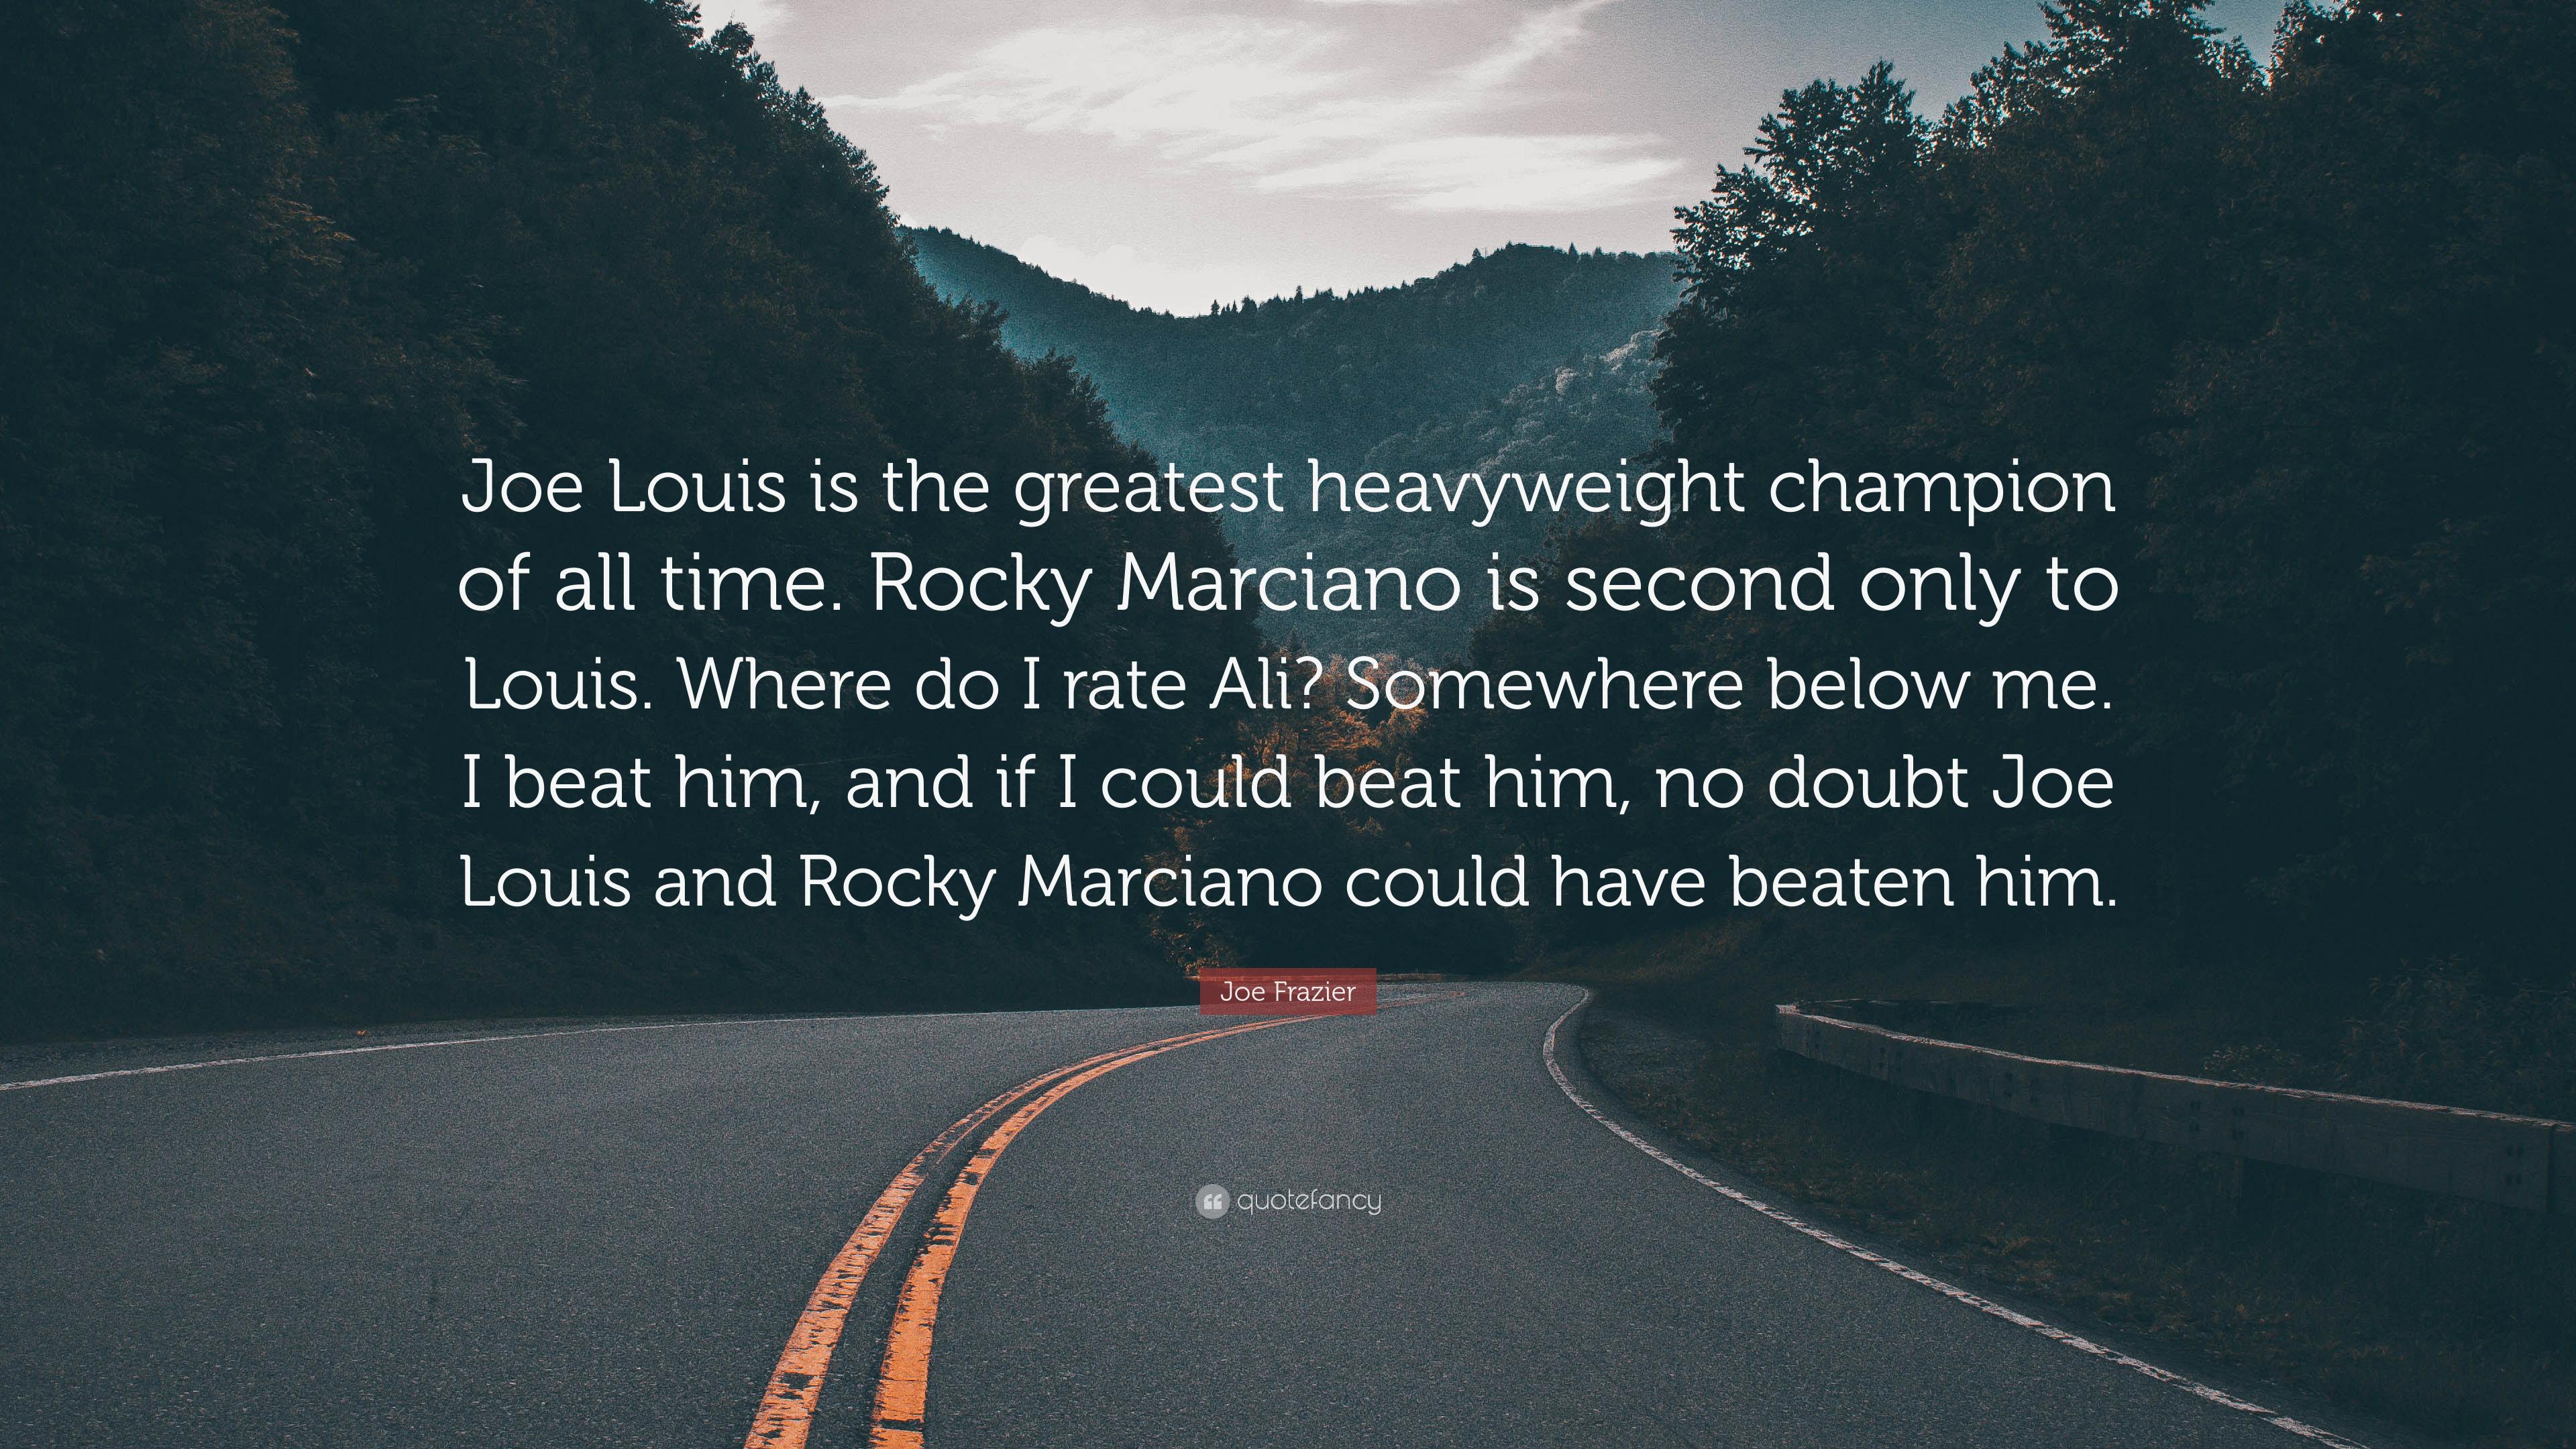 Joe Frazier Quote: “Joe Louis is the greatest heavyweight champion